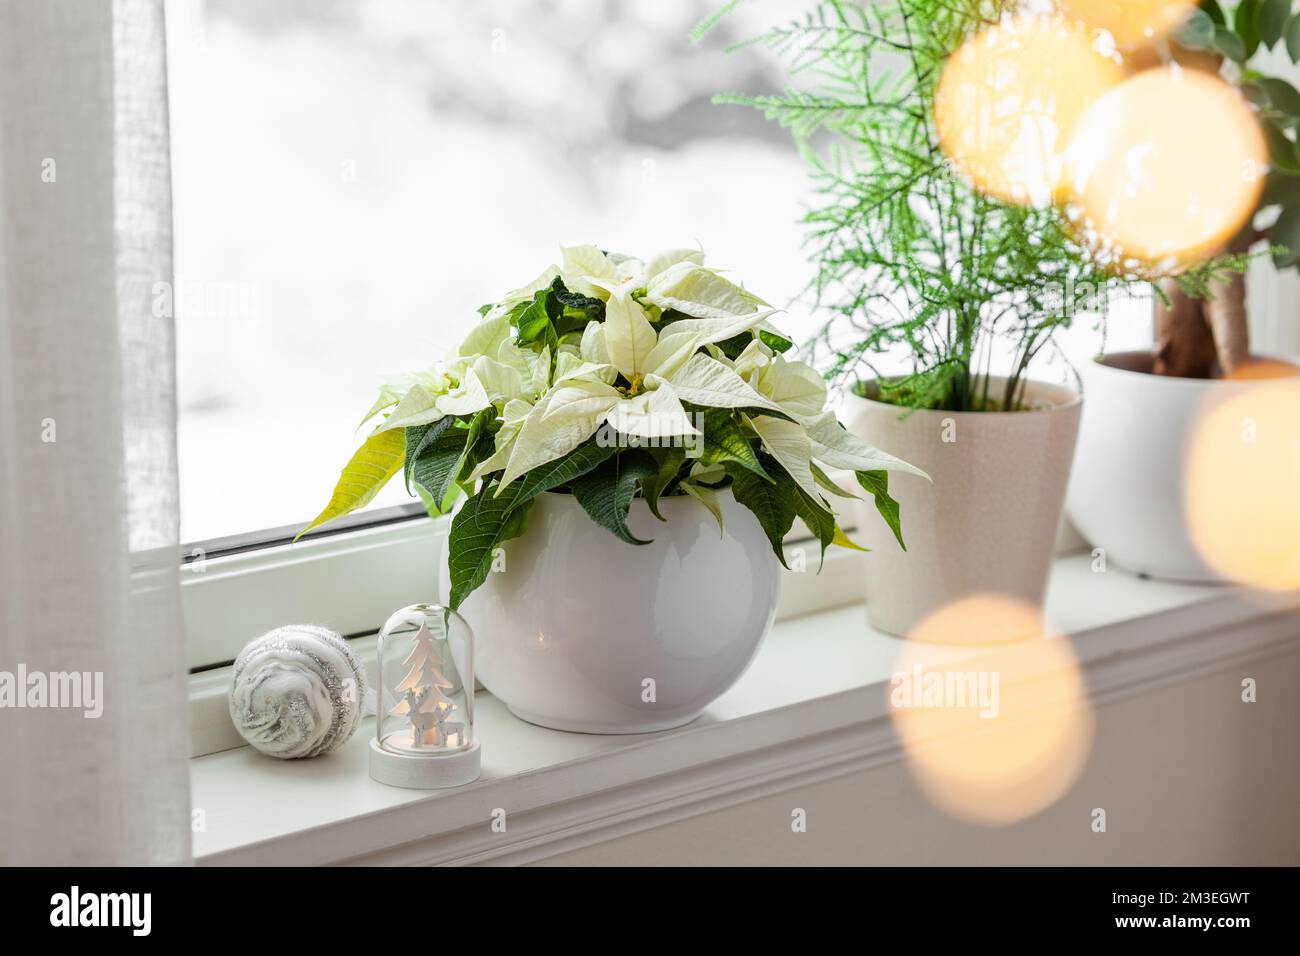 white cozy window arrangement, winter christmas concept, poinsettia flower, lights Stock Photo